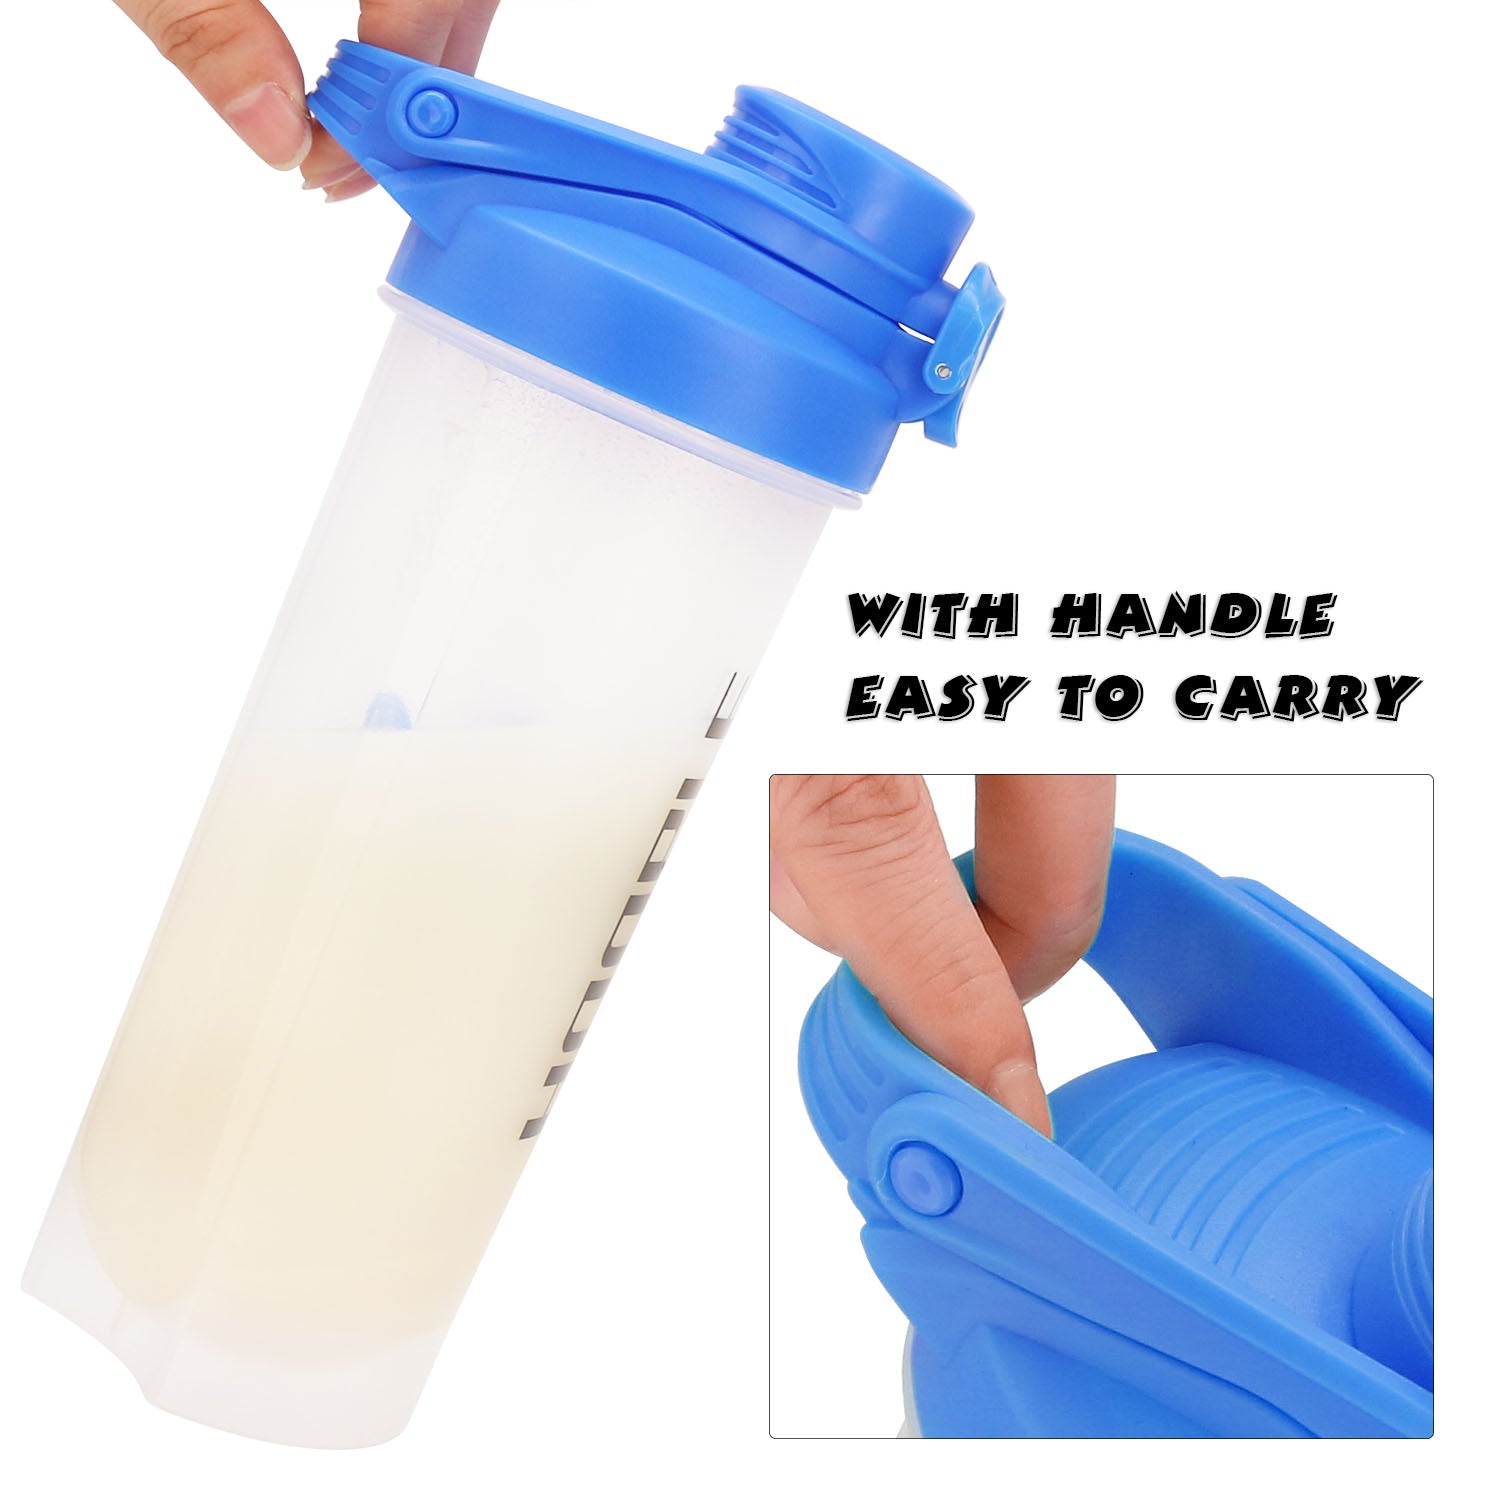 Gym Water Bottles - 24 oz. Shaker Bottle w/ Mixer & Handle